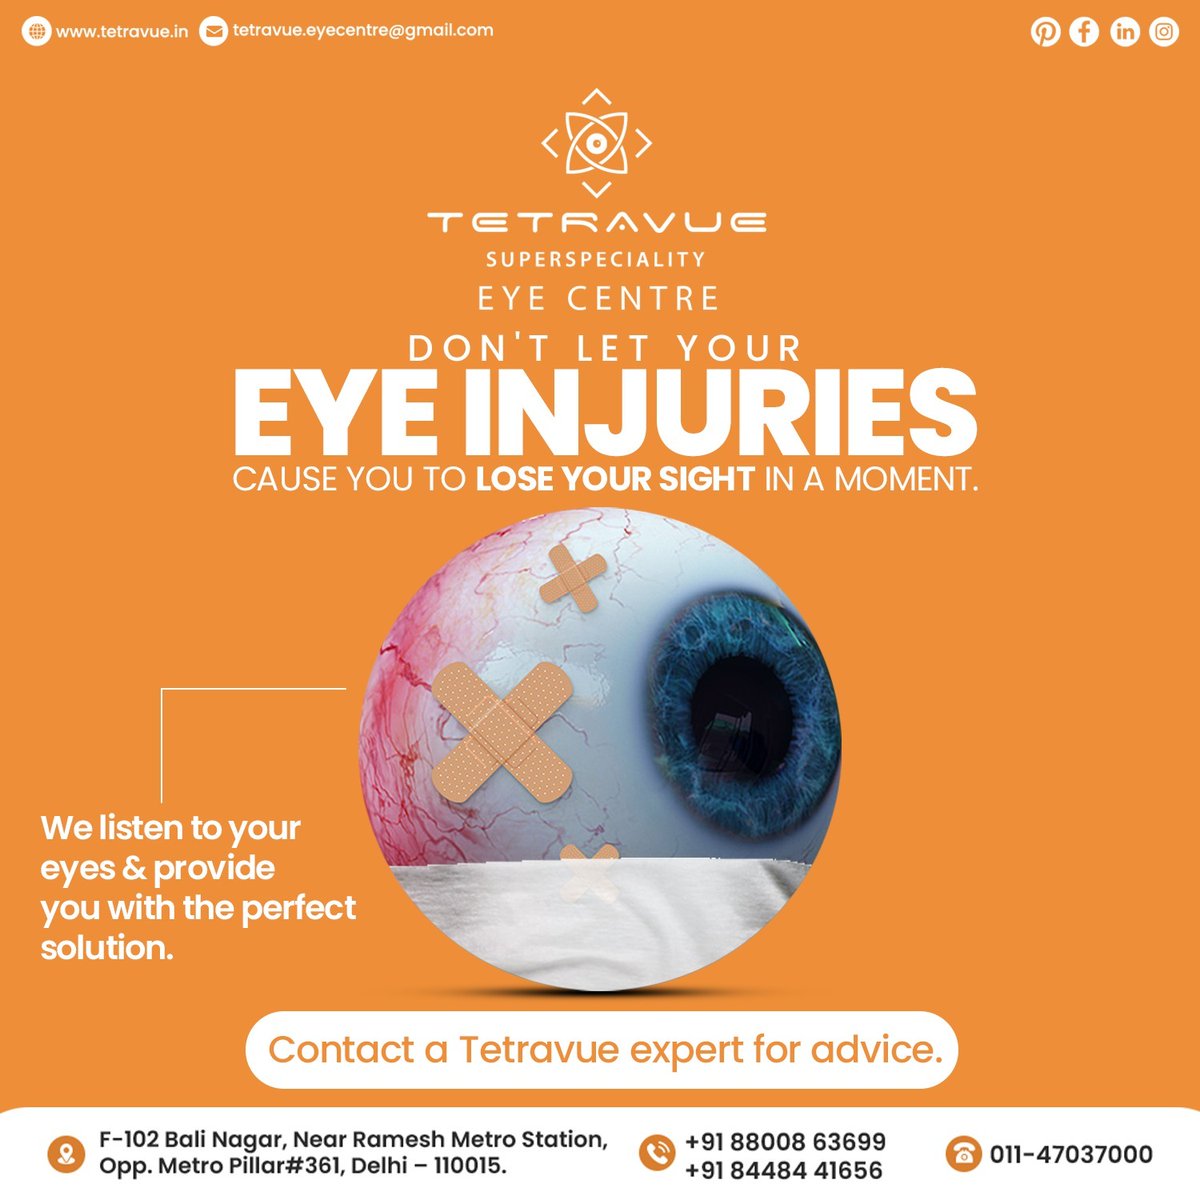 If you got an eye injury then immediately consult #tetravue Book your appointment today +91 88008 63699 +91 84484 41656
#eyecentre #drneha #drnehagoel #drmukeshtaneja #eyeinjury #eyesafe #eyesafety #eyehealth #eyecare #visionhealth #optometrist #kidseyeinjury #tetravueeyecentre